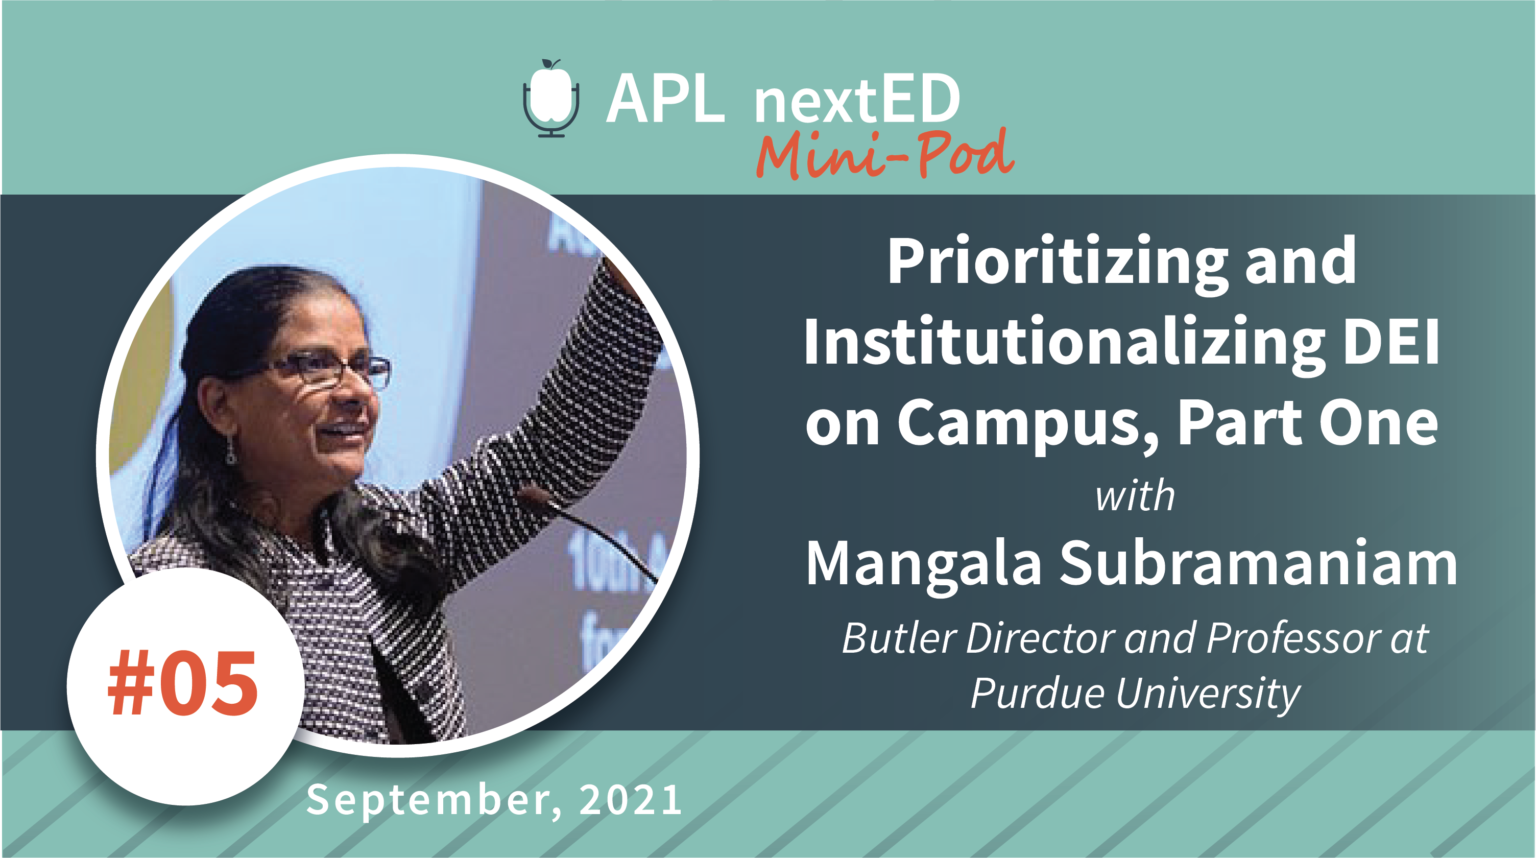 APL nextED Mini-Pod Episode 5: Prioritizing and Institutionalizing DEI on Campus with Dr. Mangala Subramaniam